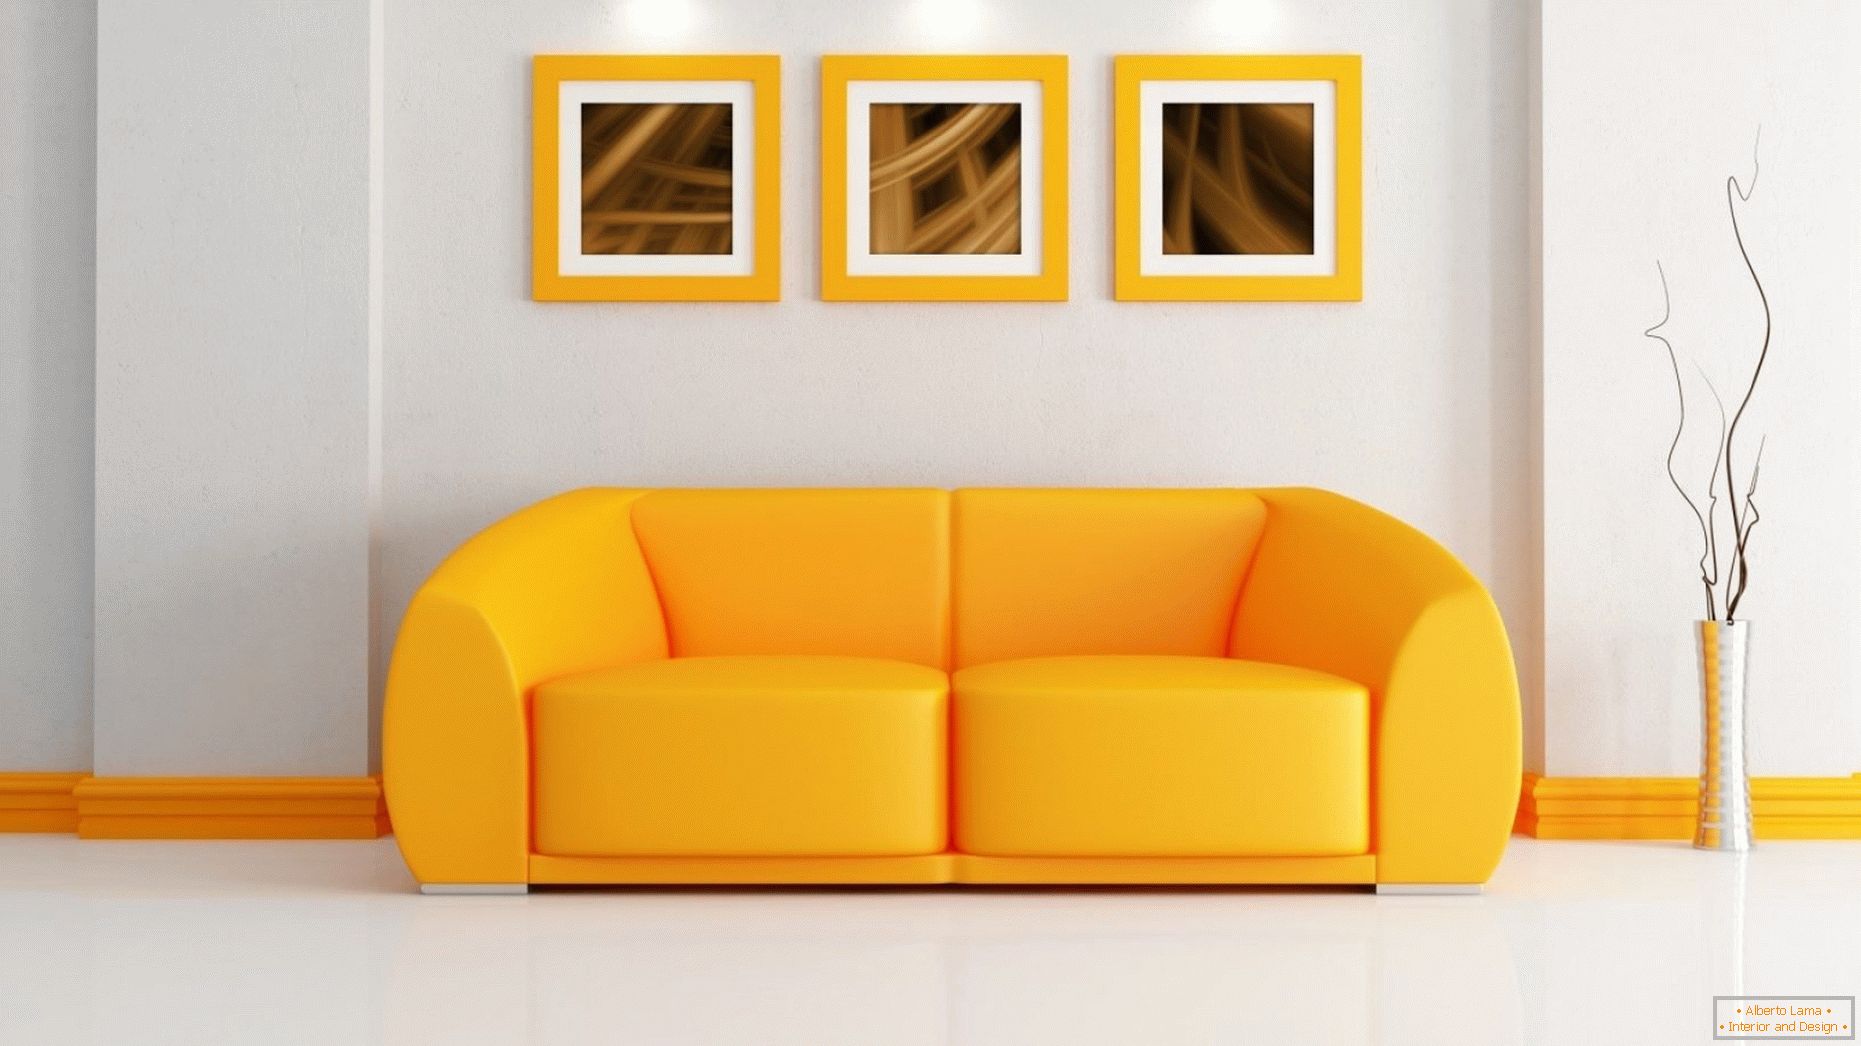 Bright interior with an orange sofa